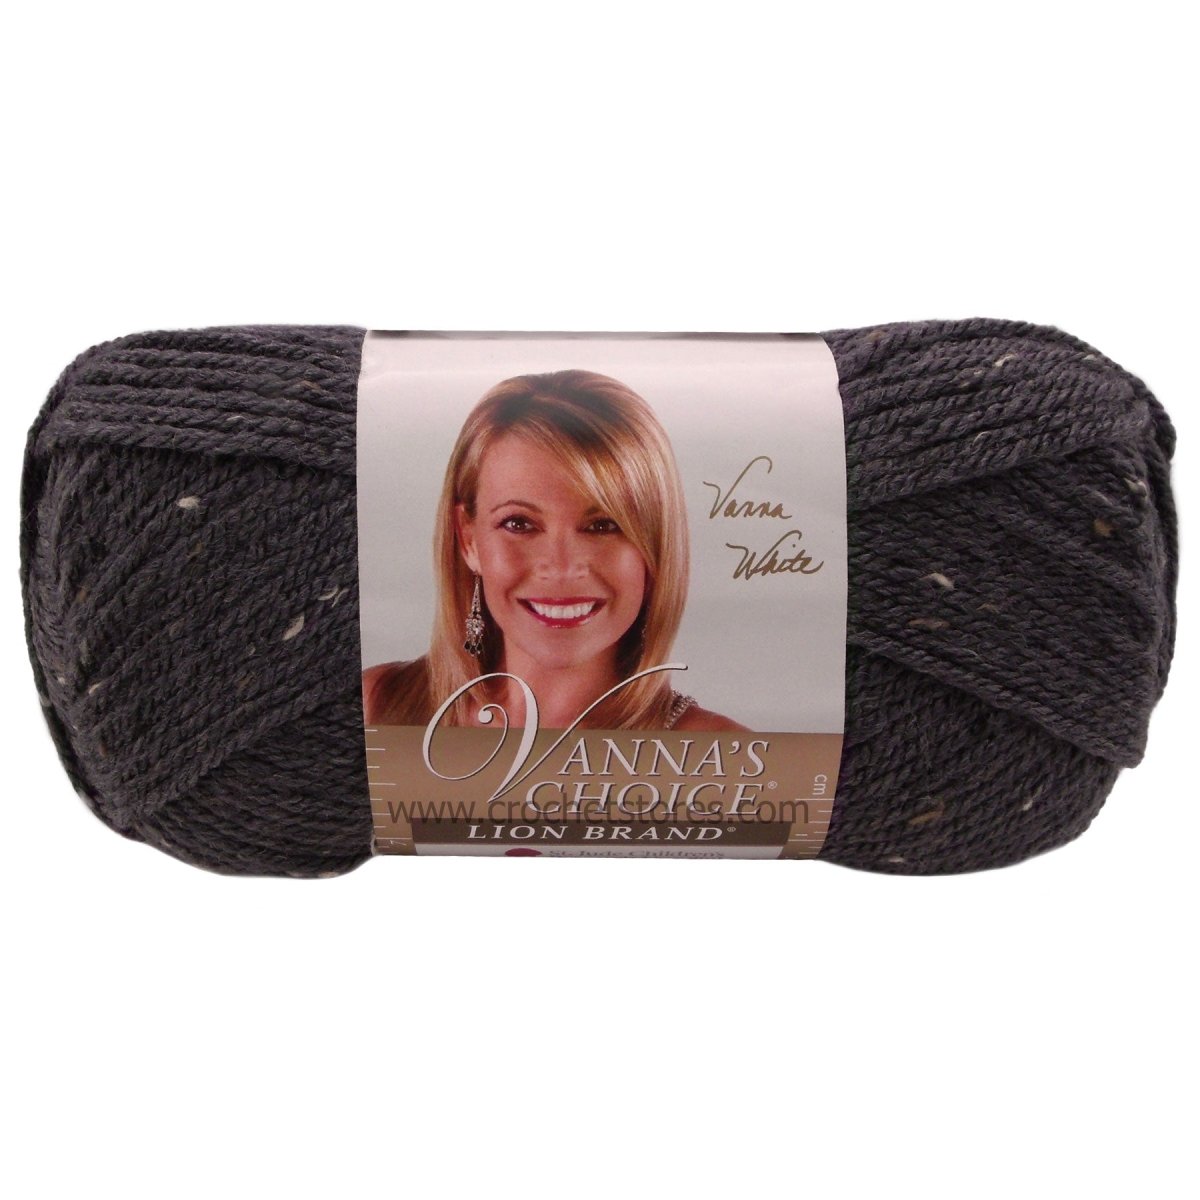 VANNAS CHOICE - Crochetstores860-407